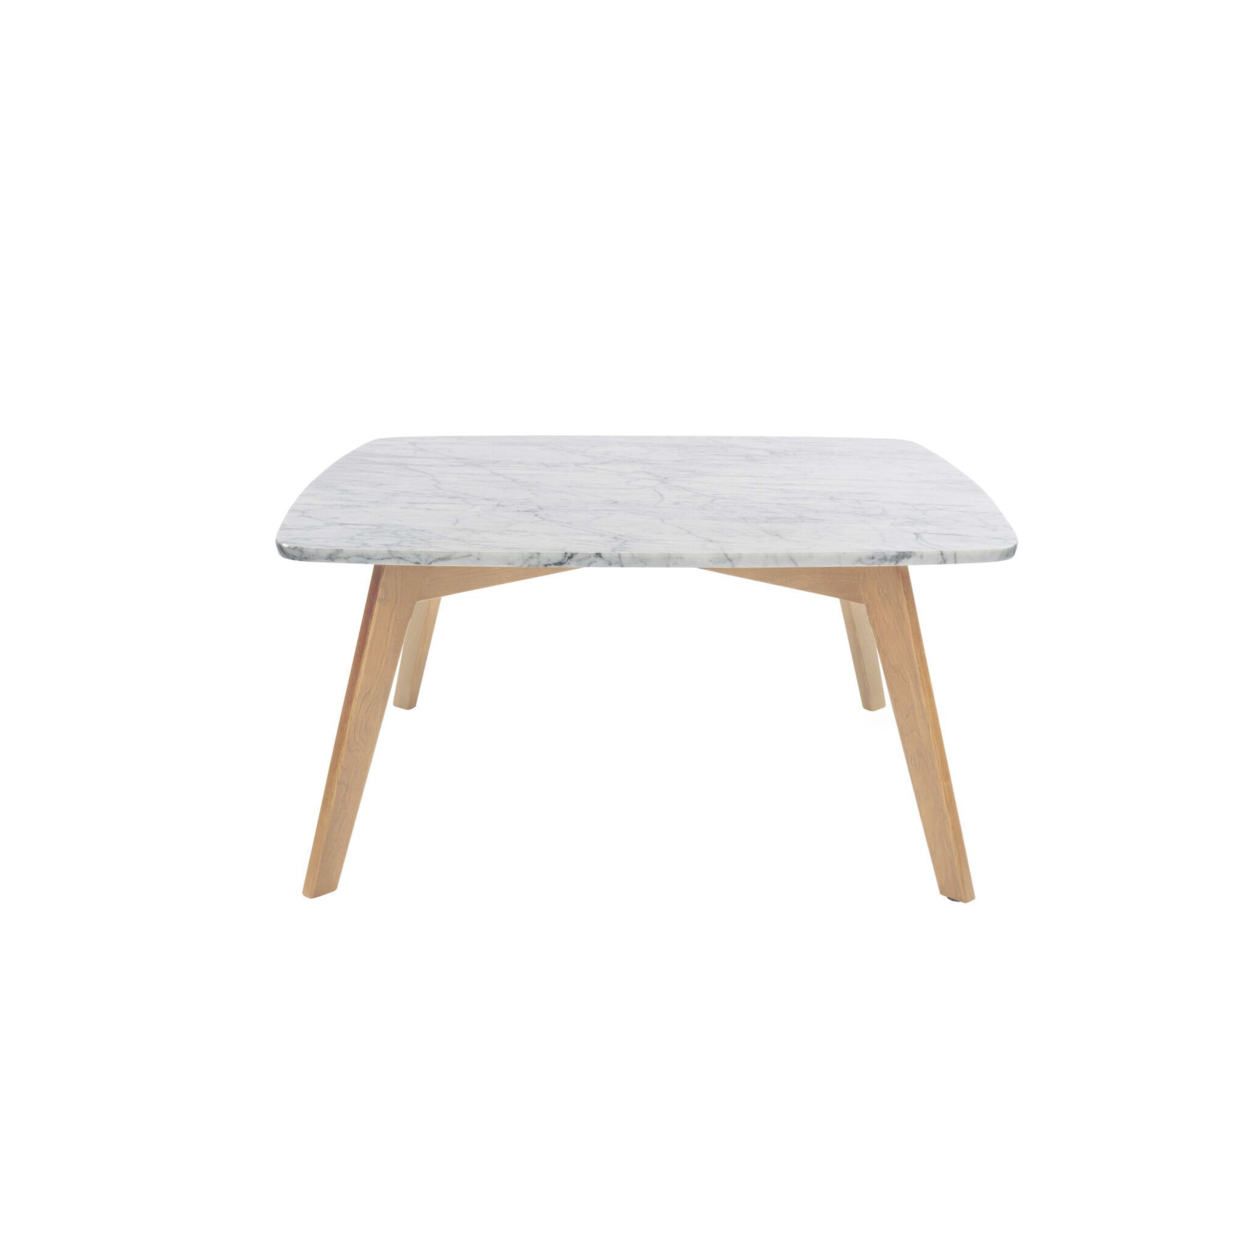 Vezzana 31" Square Italian Carrara White Marble Coffee Table with Legs - oak